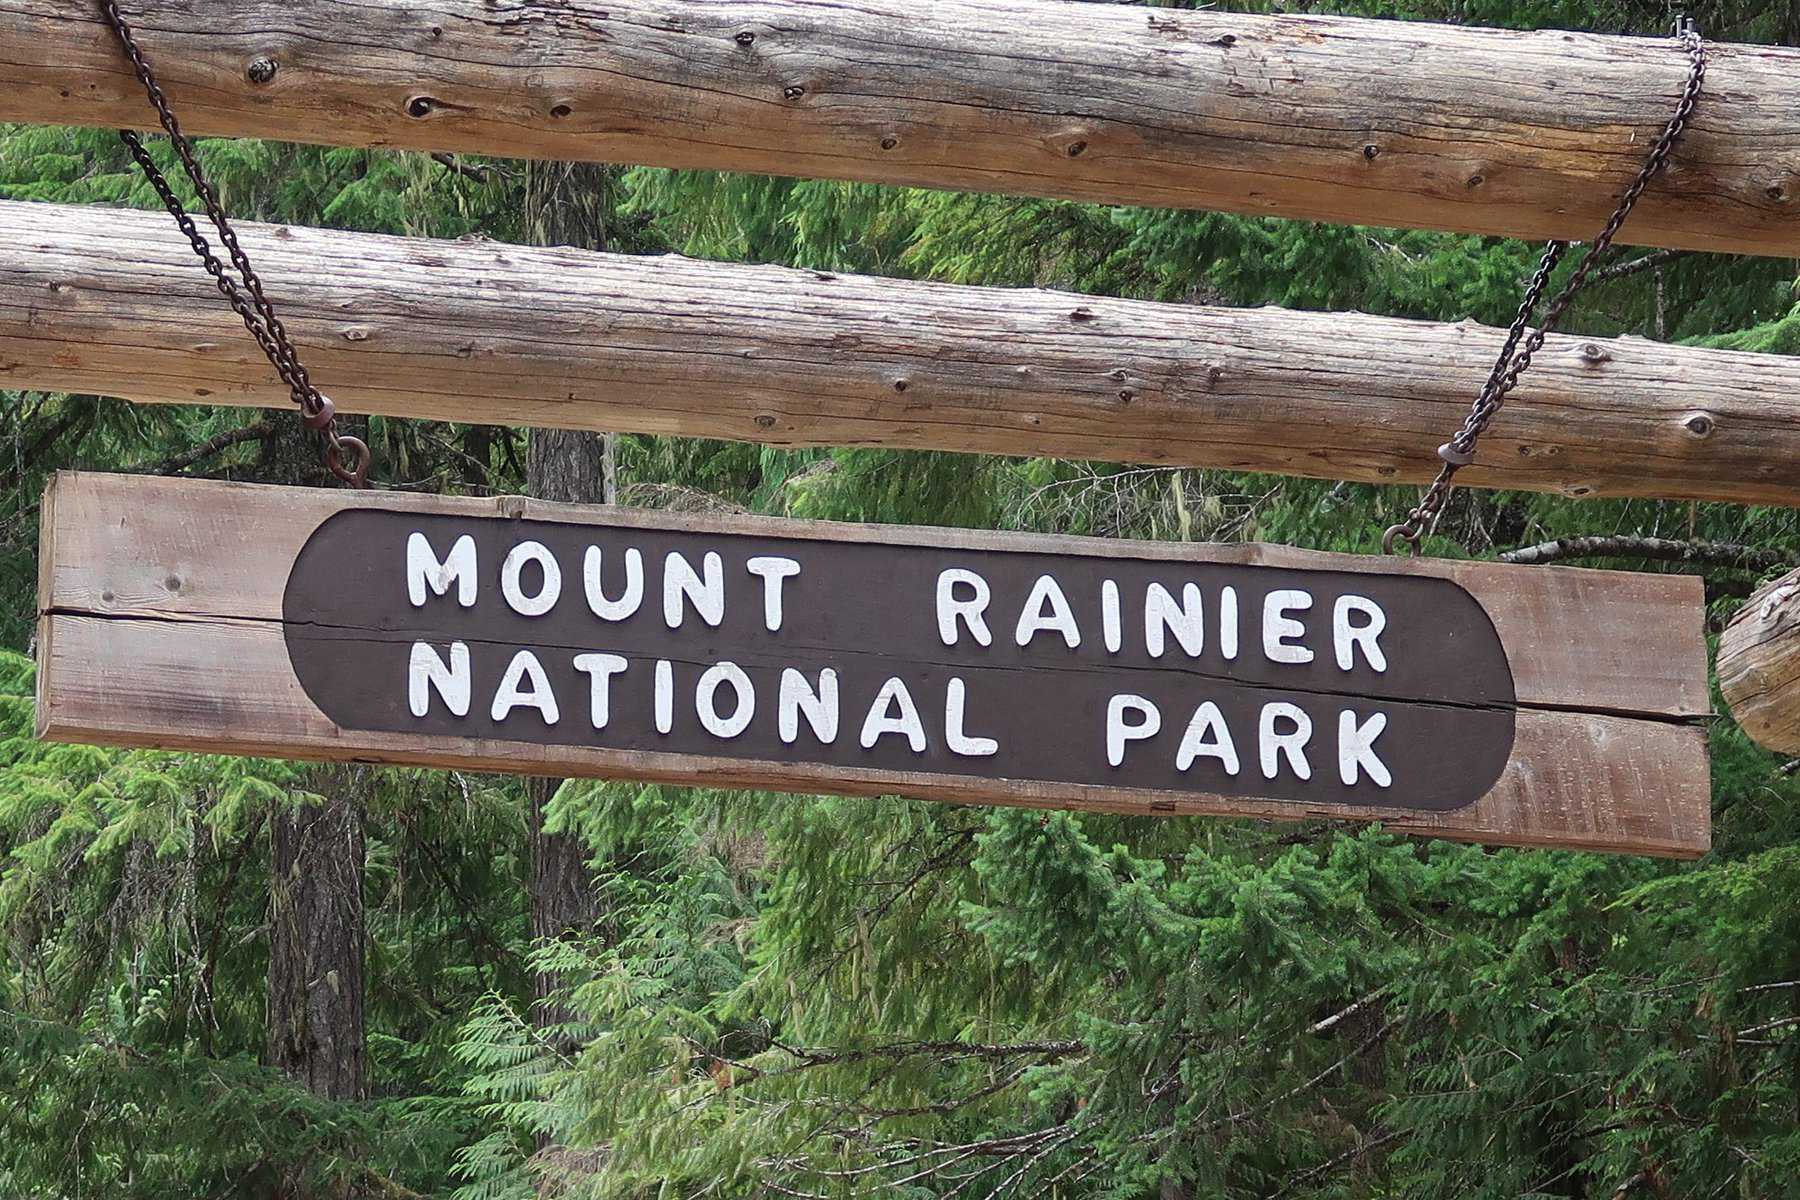 MOUNT RAINIER NATIONAL PARK